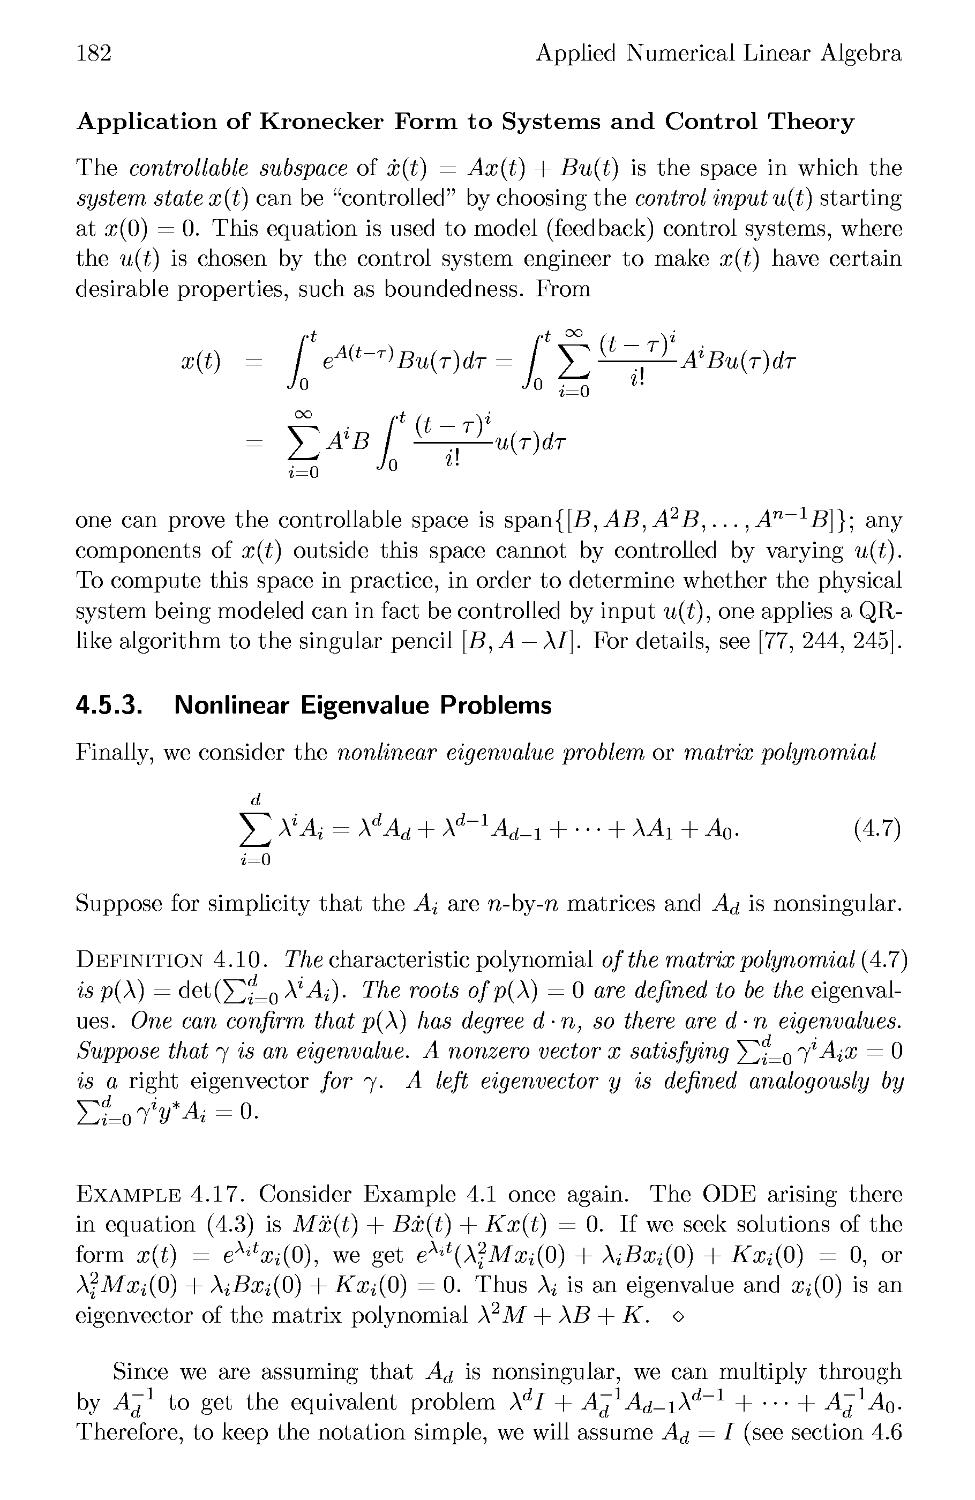 4.5.3 Nonlinear Eigenvalue Problems